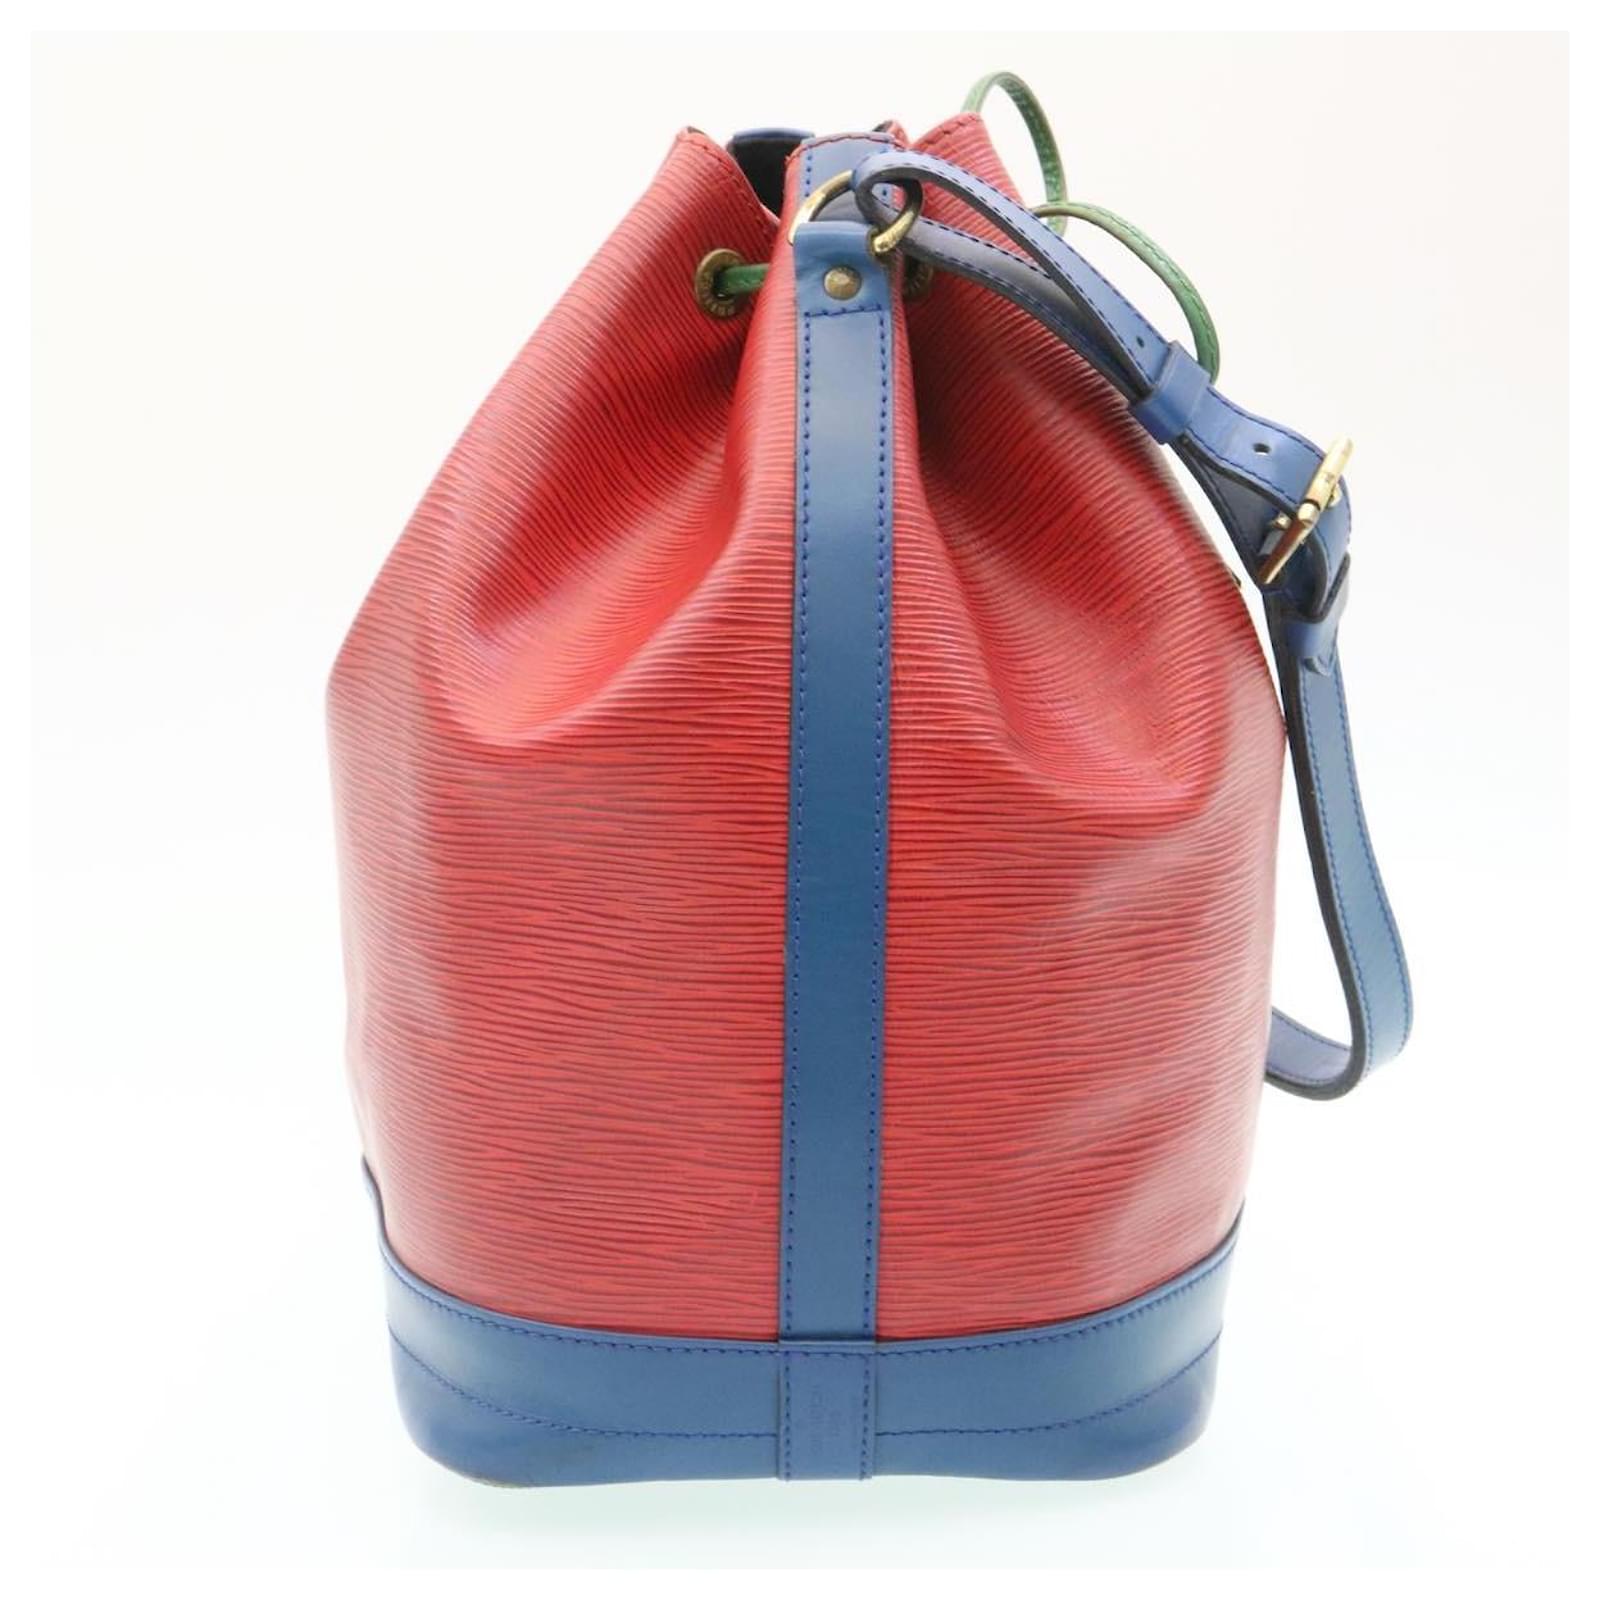 LOUIS VUITTON Epi Tricolor Noe Shoulder Bag Blue Red Green M44082